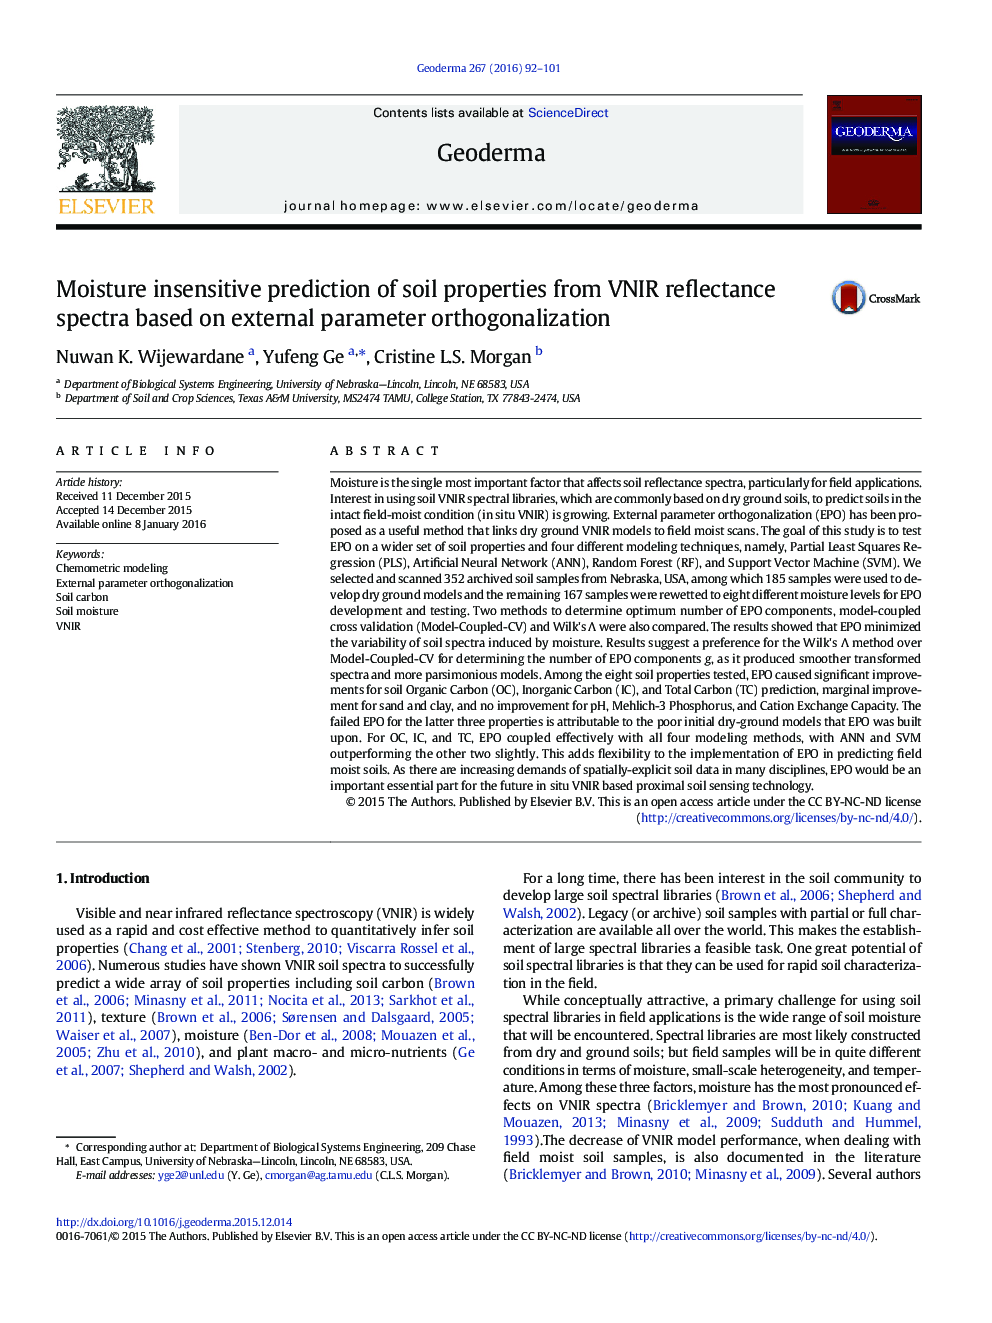 Moisture insensitive prediction of soil properties from VNIR reflectance spectra based on external parameter orthogonalization